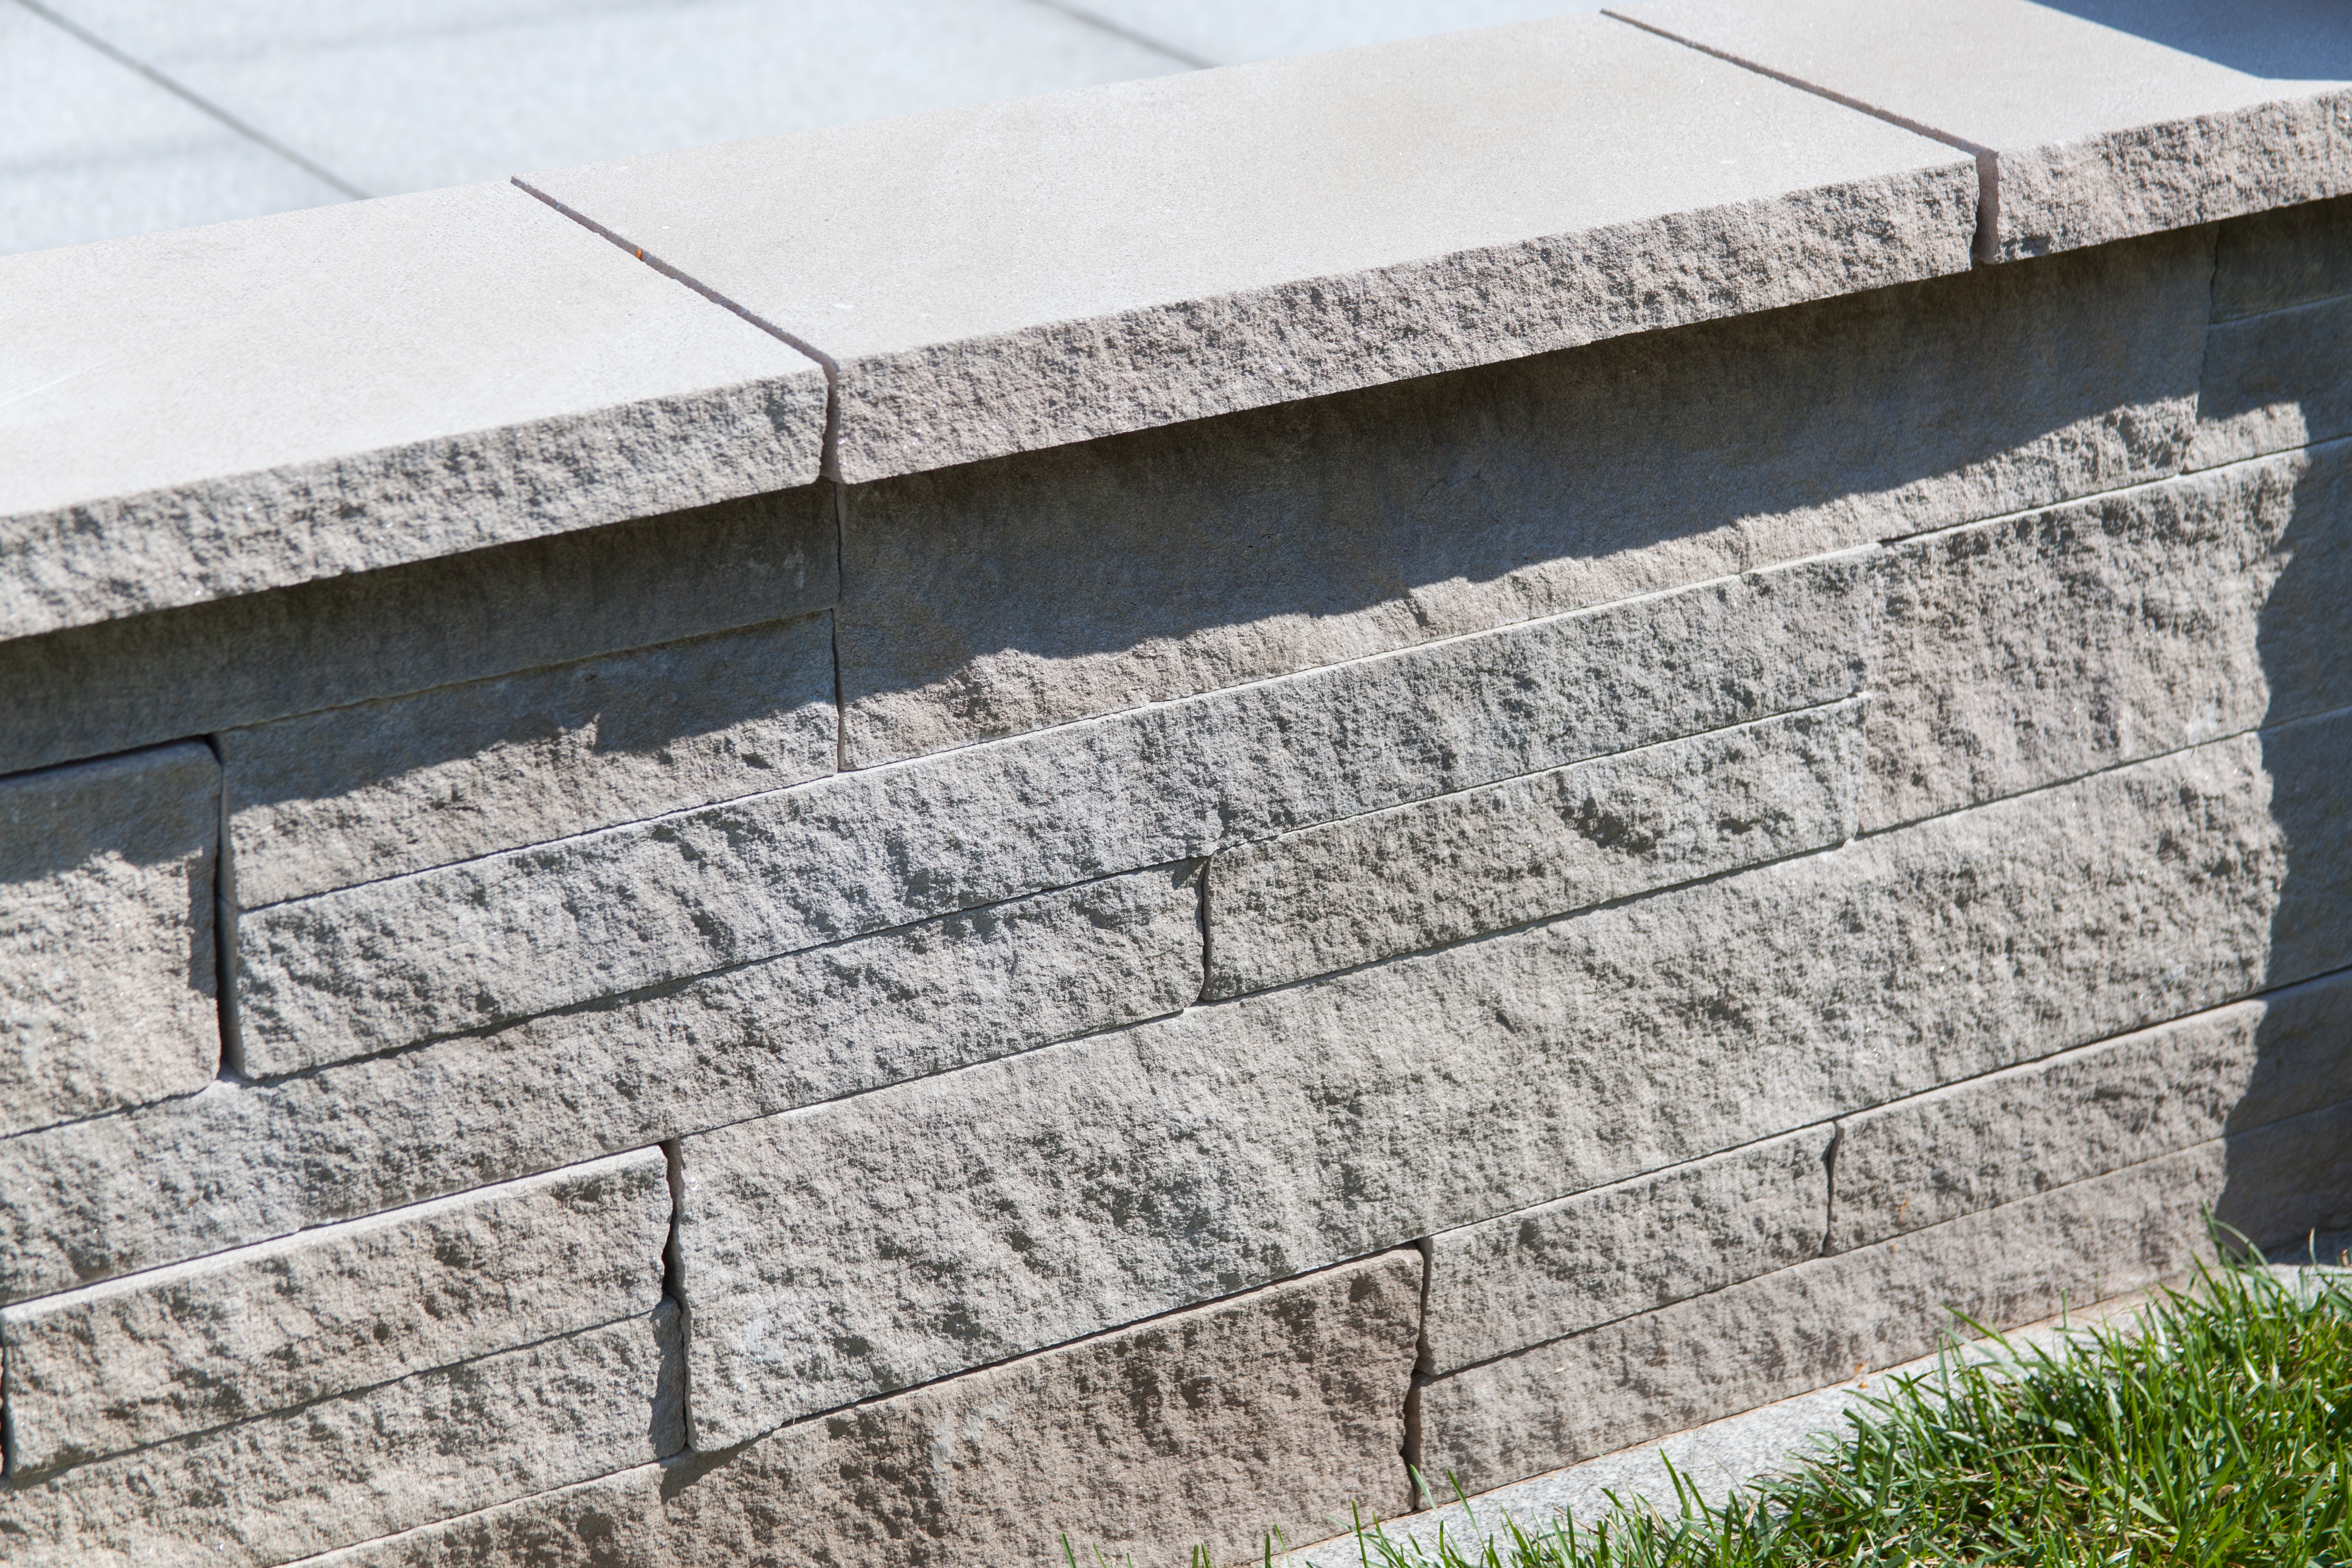 limestone-wall-garden-landscaping-wall-stone